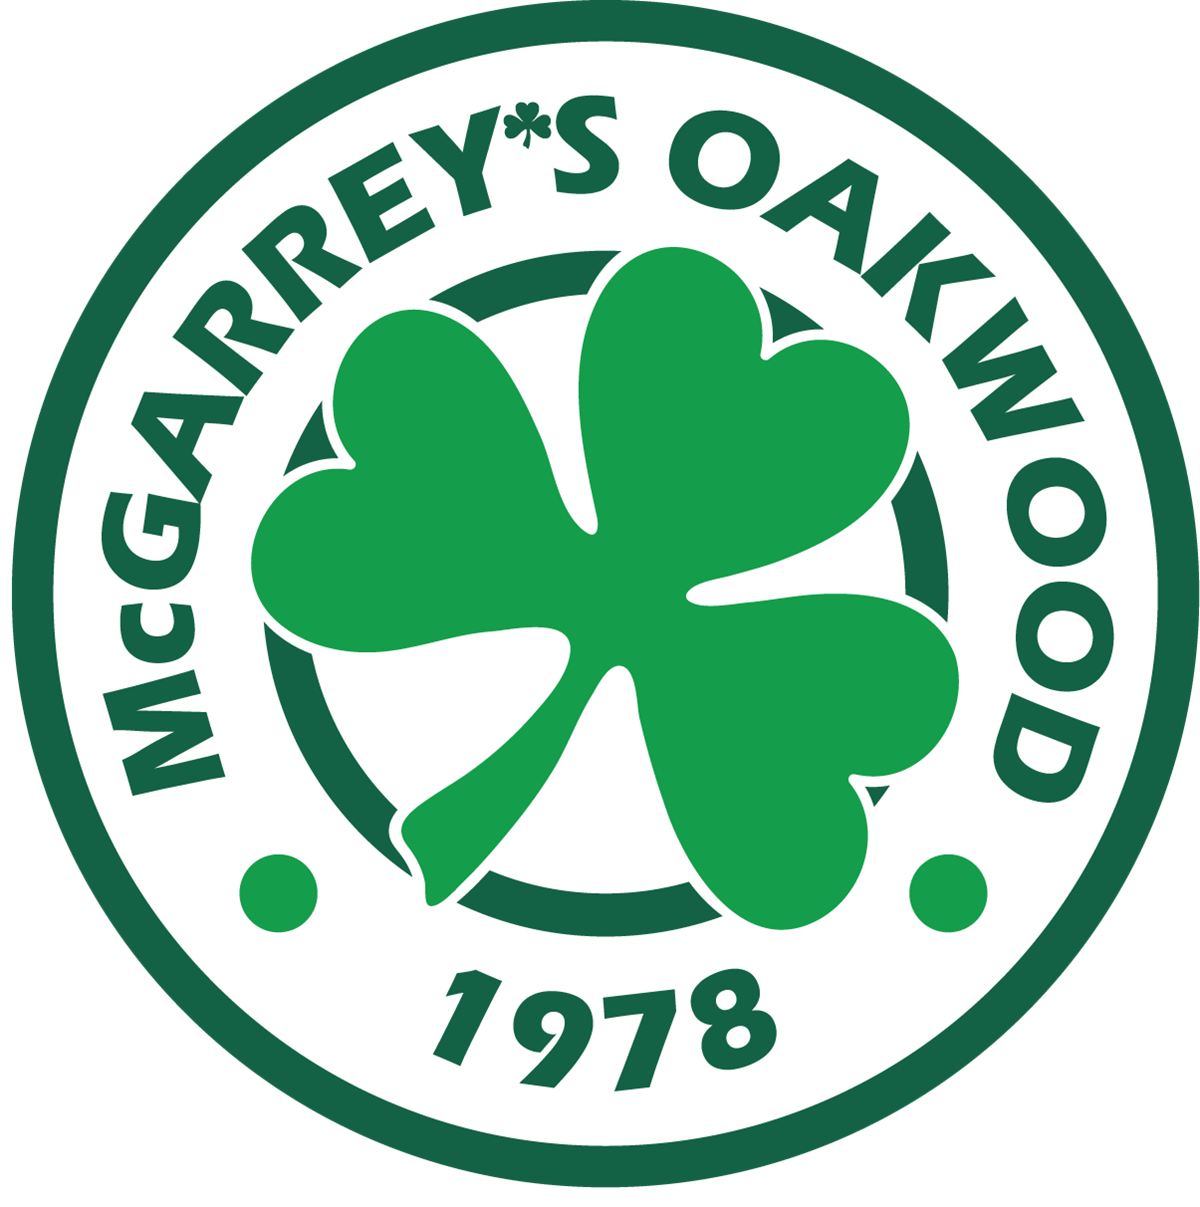 McGarrey's Oakwood Cafe - Homepage